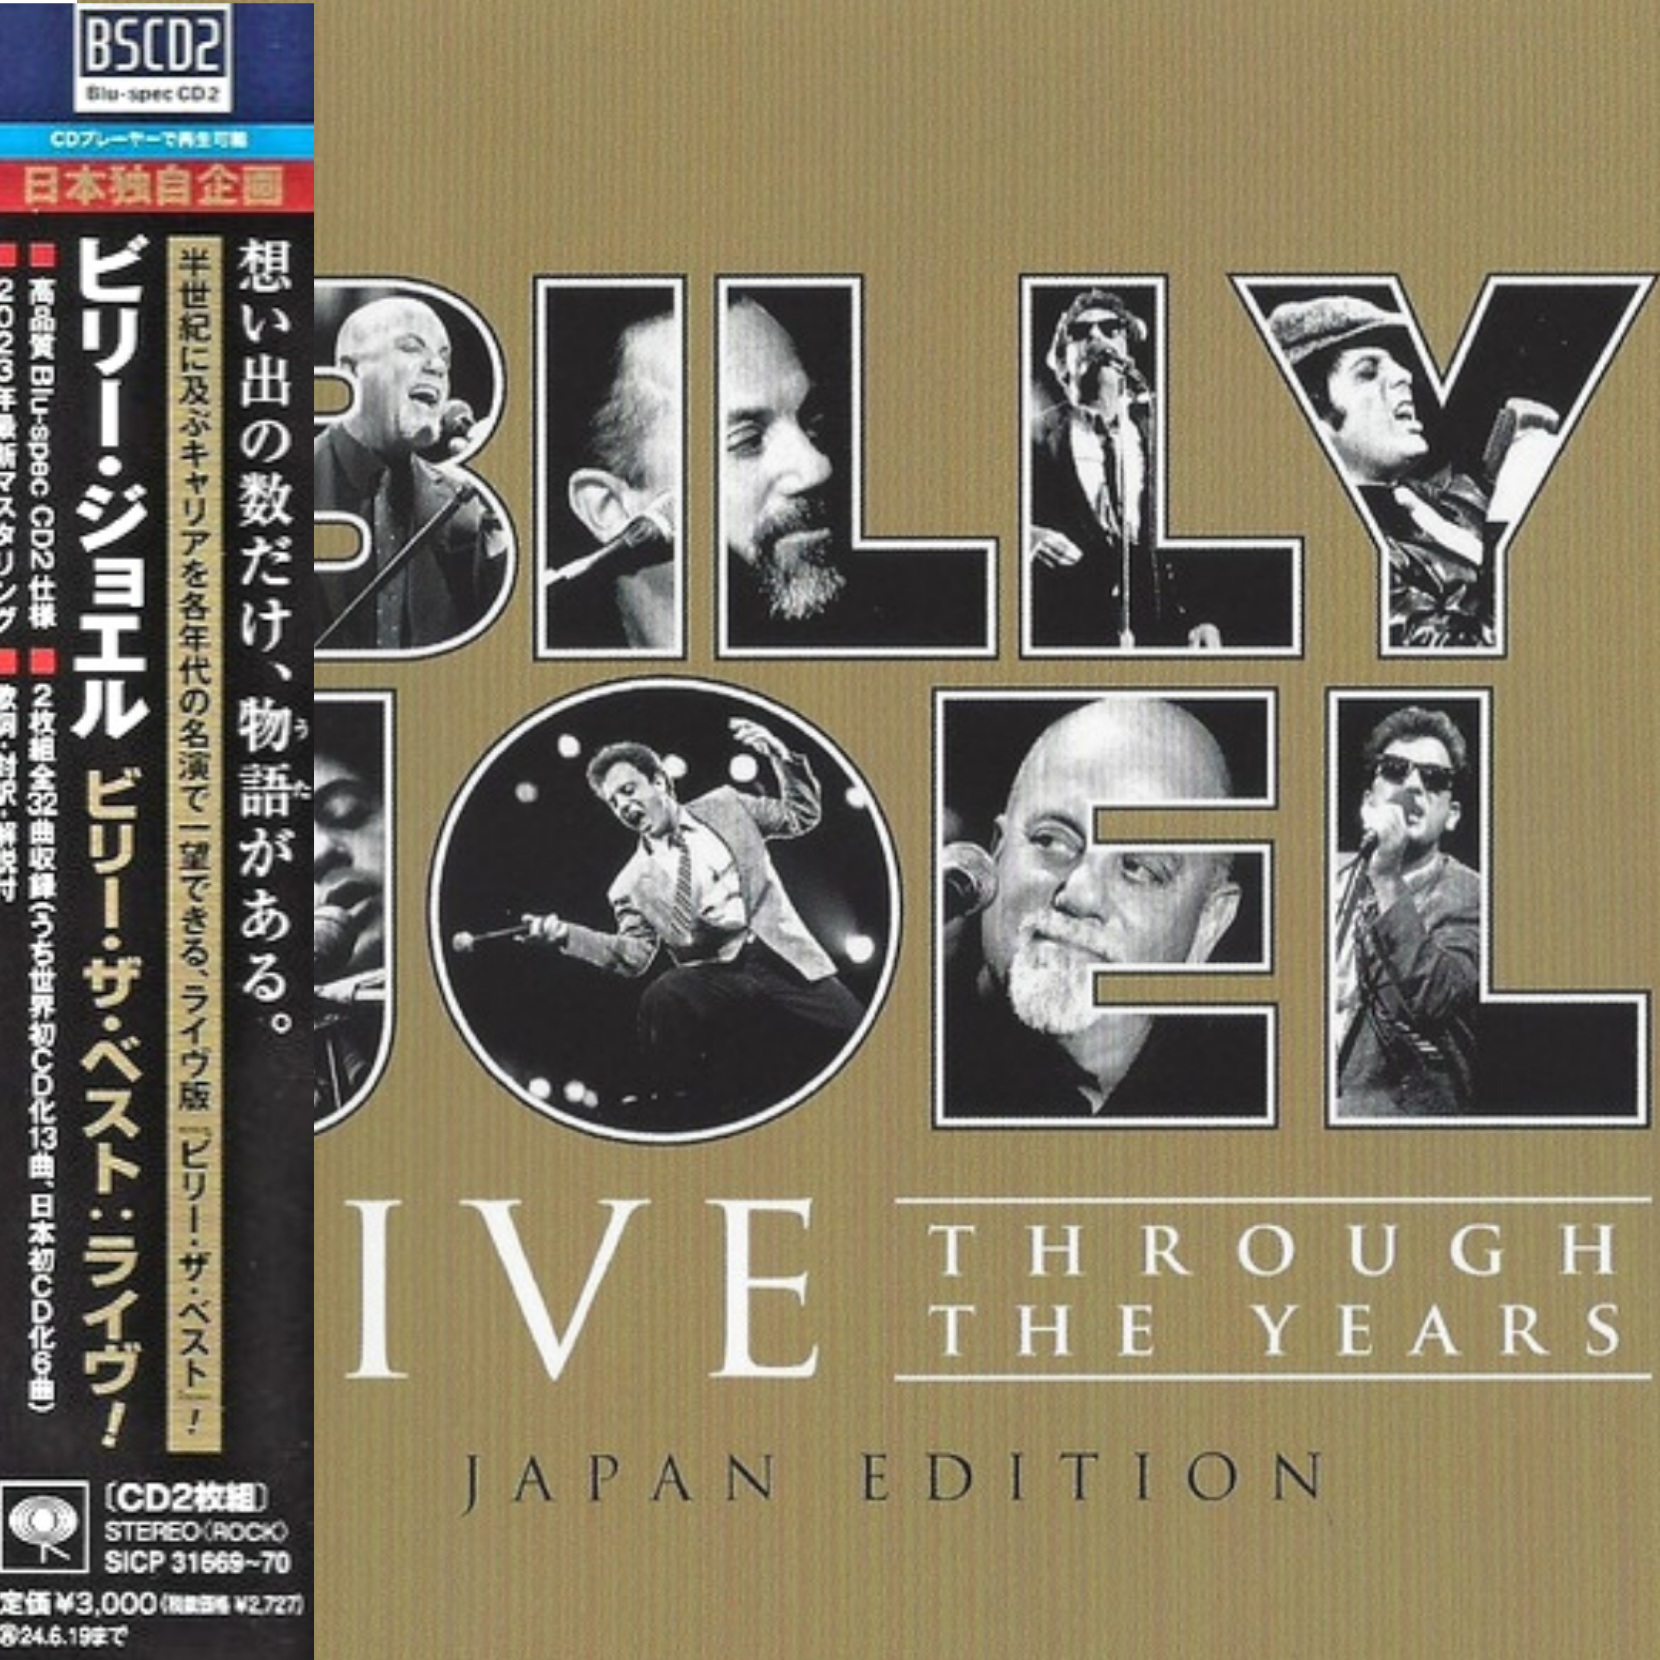 Billy-Joel_Live_Through_the_Year_Japan_Blu-specCD2